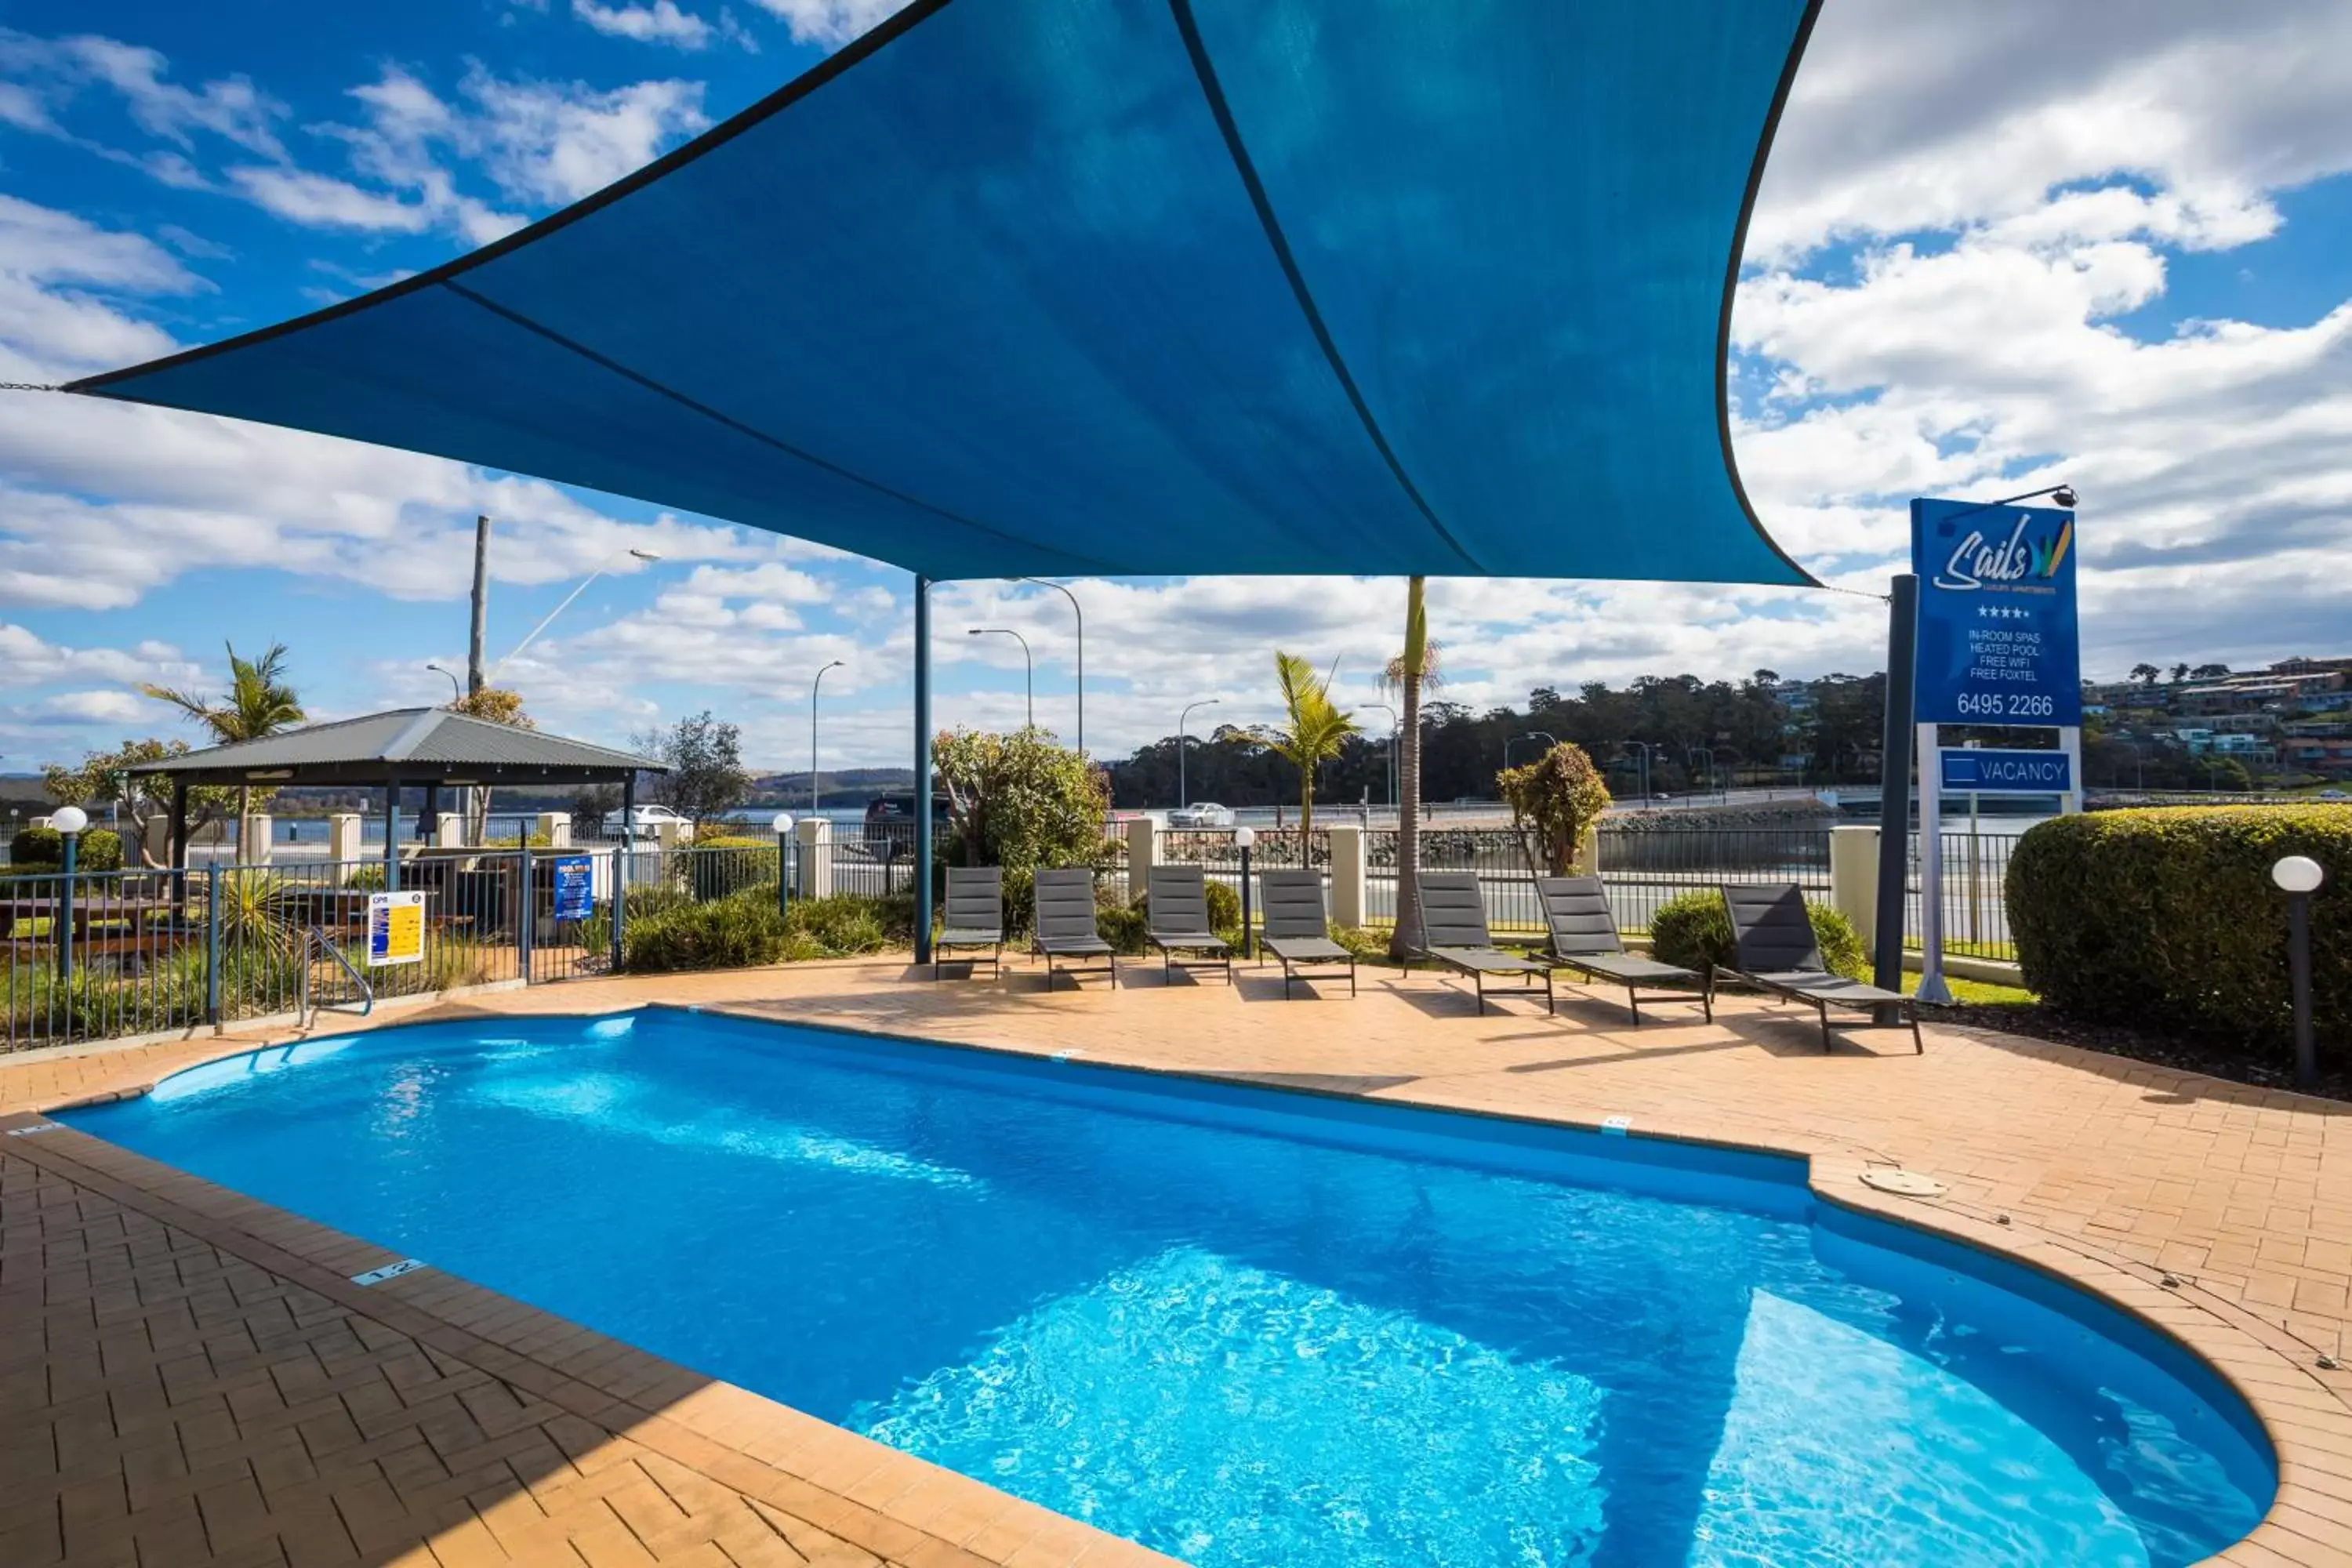 Swimming Pool in Sails Luxury Apartments Merimbula